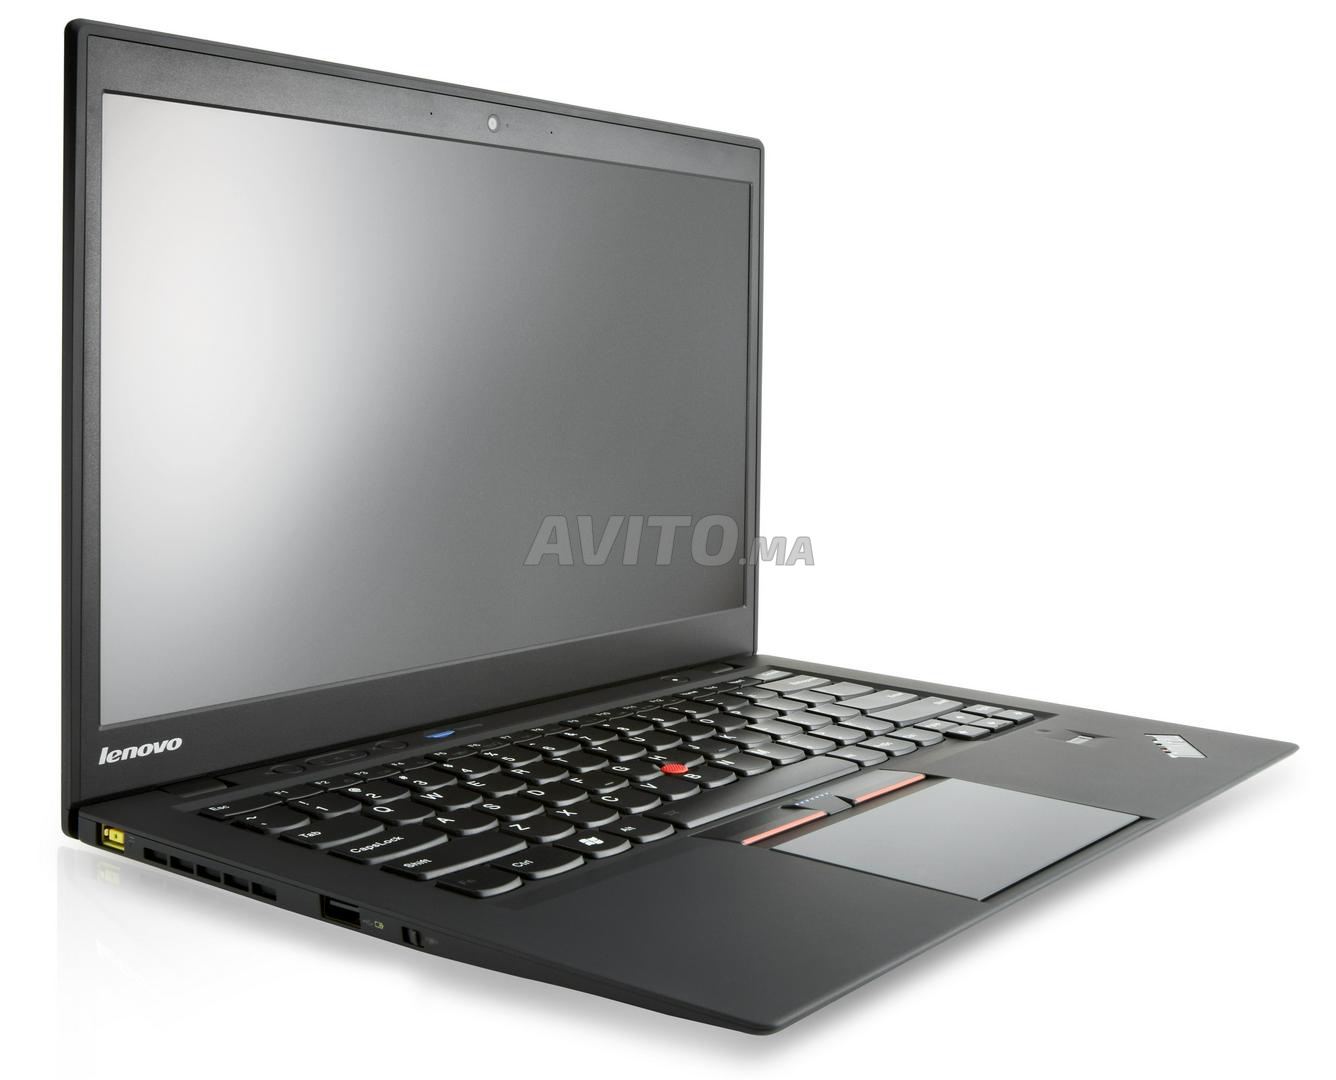 Lenovo ThinkPad X1 Carbon i5 Gen 3 SSD 128GB - 1